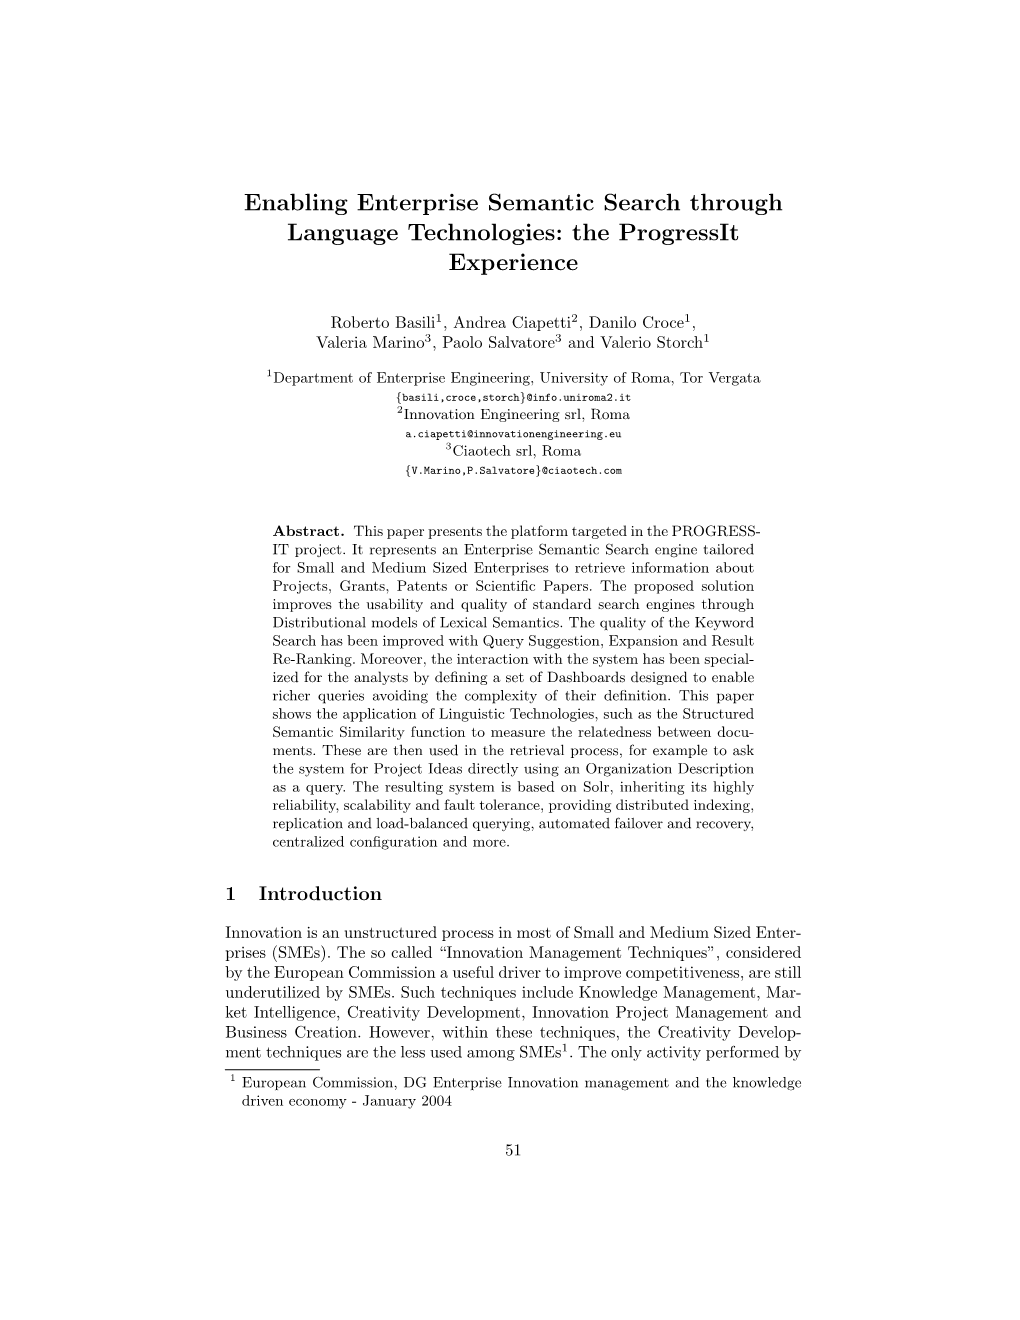 Enabling Enterprise Semantic Search Through Language Technologies: the Progressit Experience